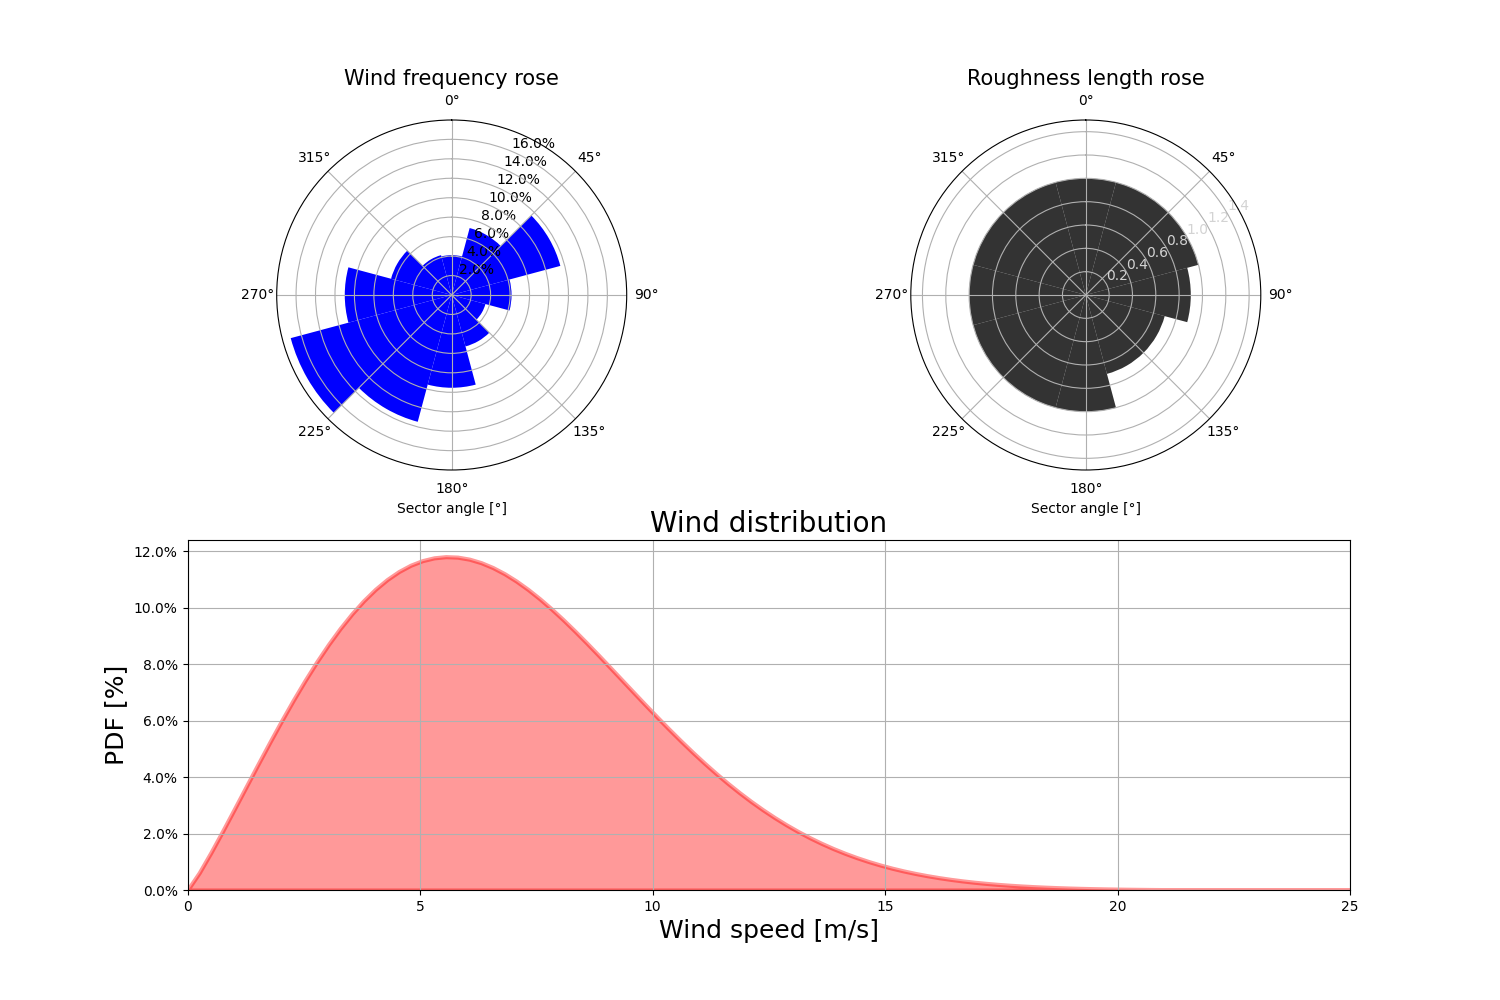 _images/wind_distribution.png